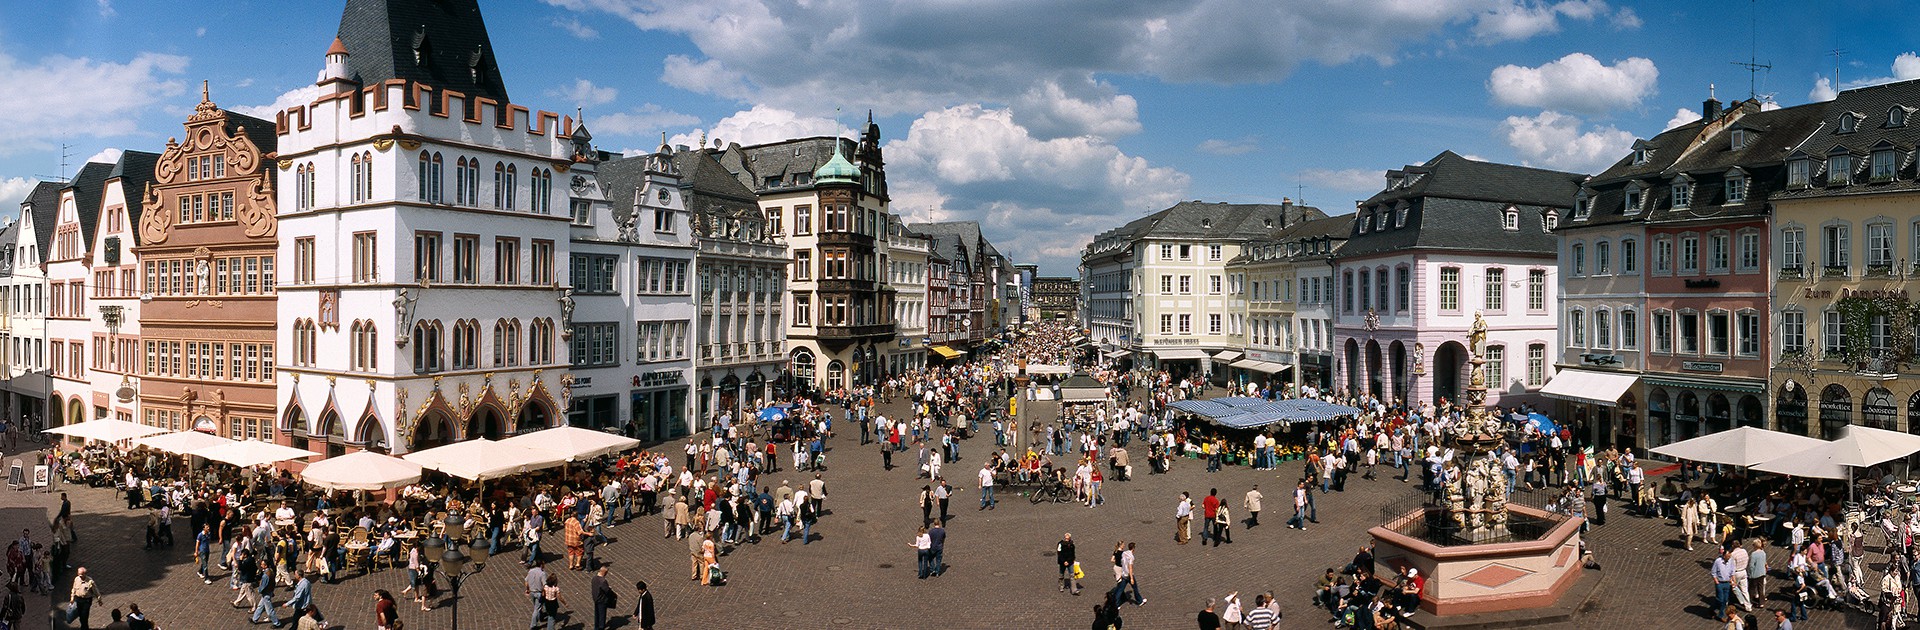 Main Market Square Trier